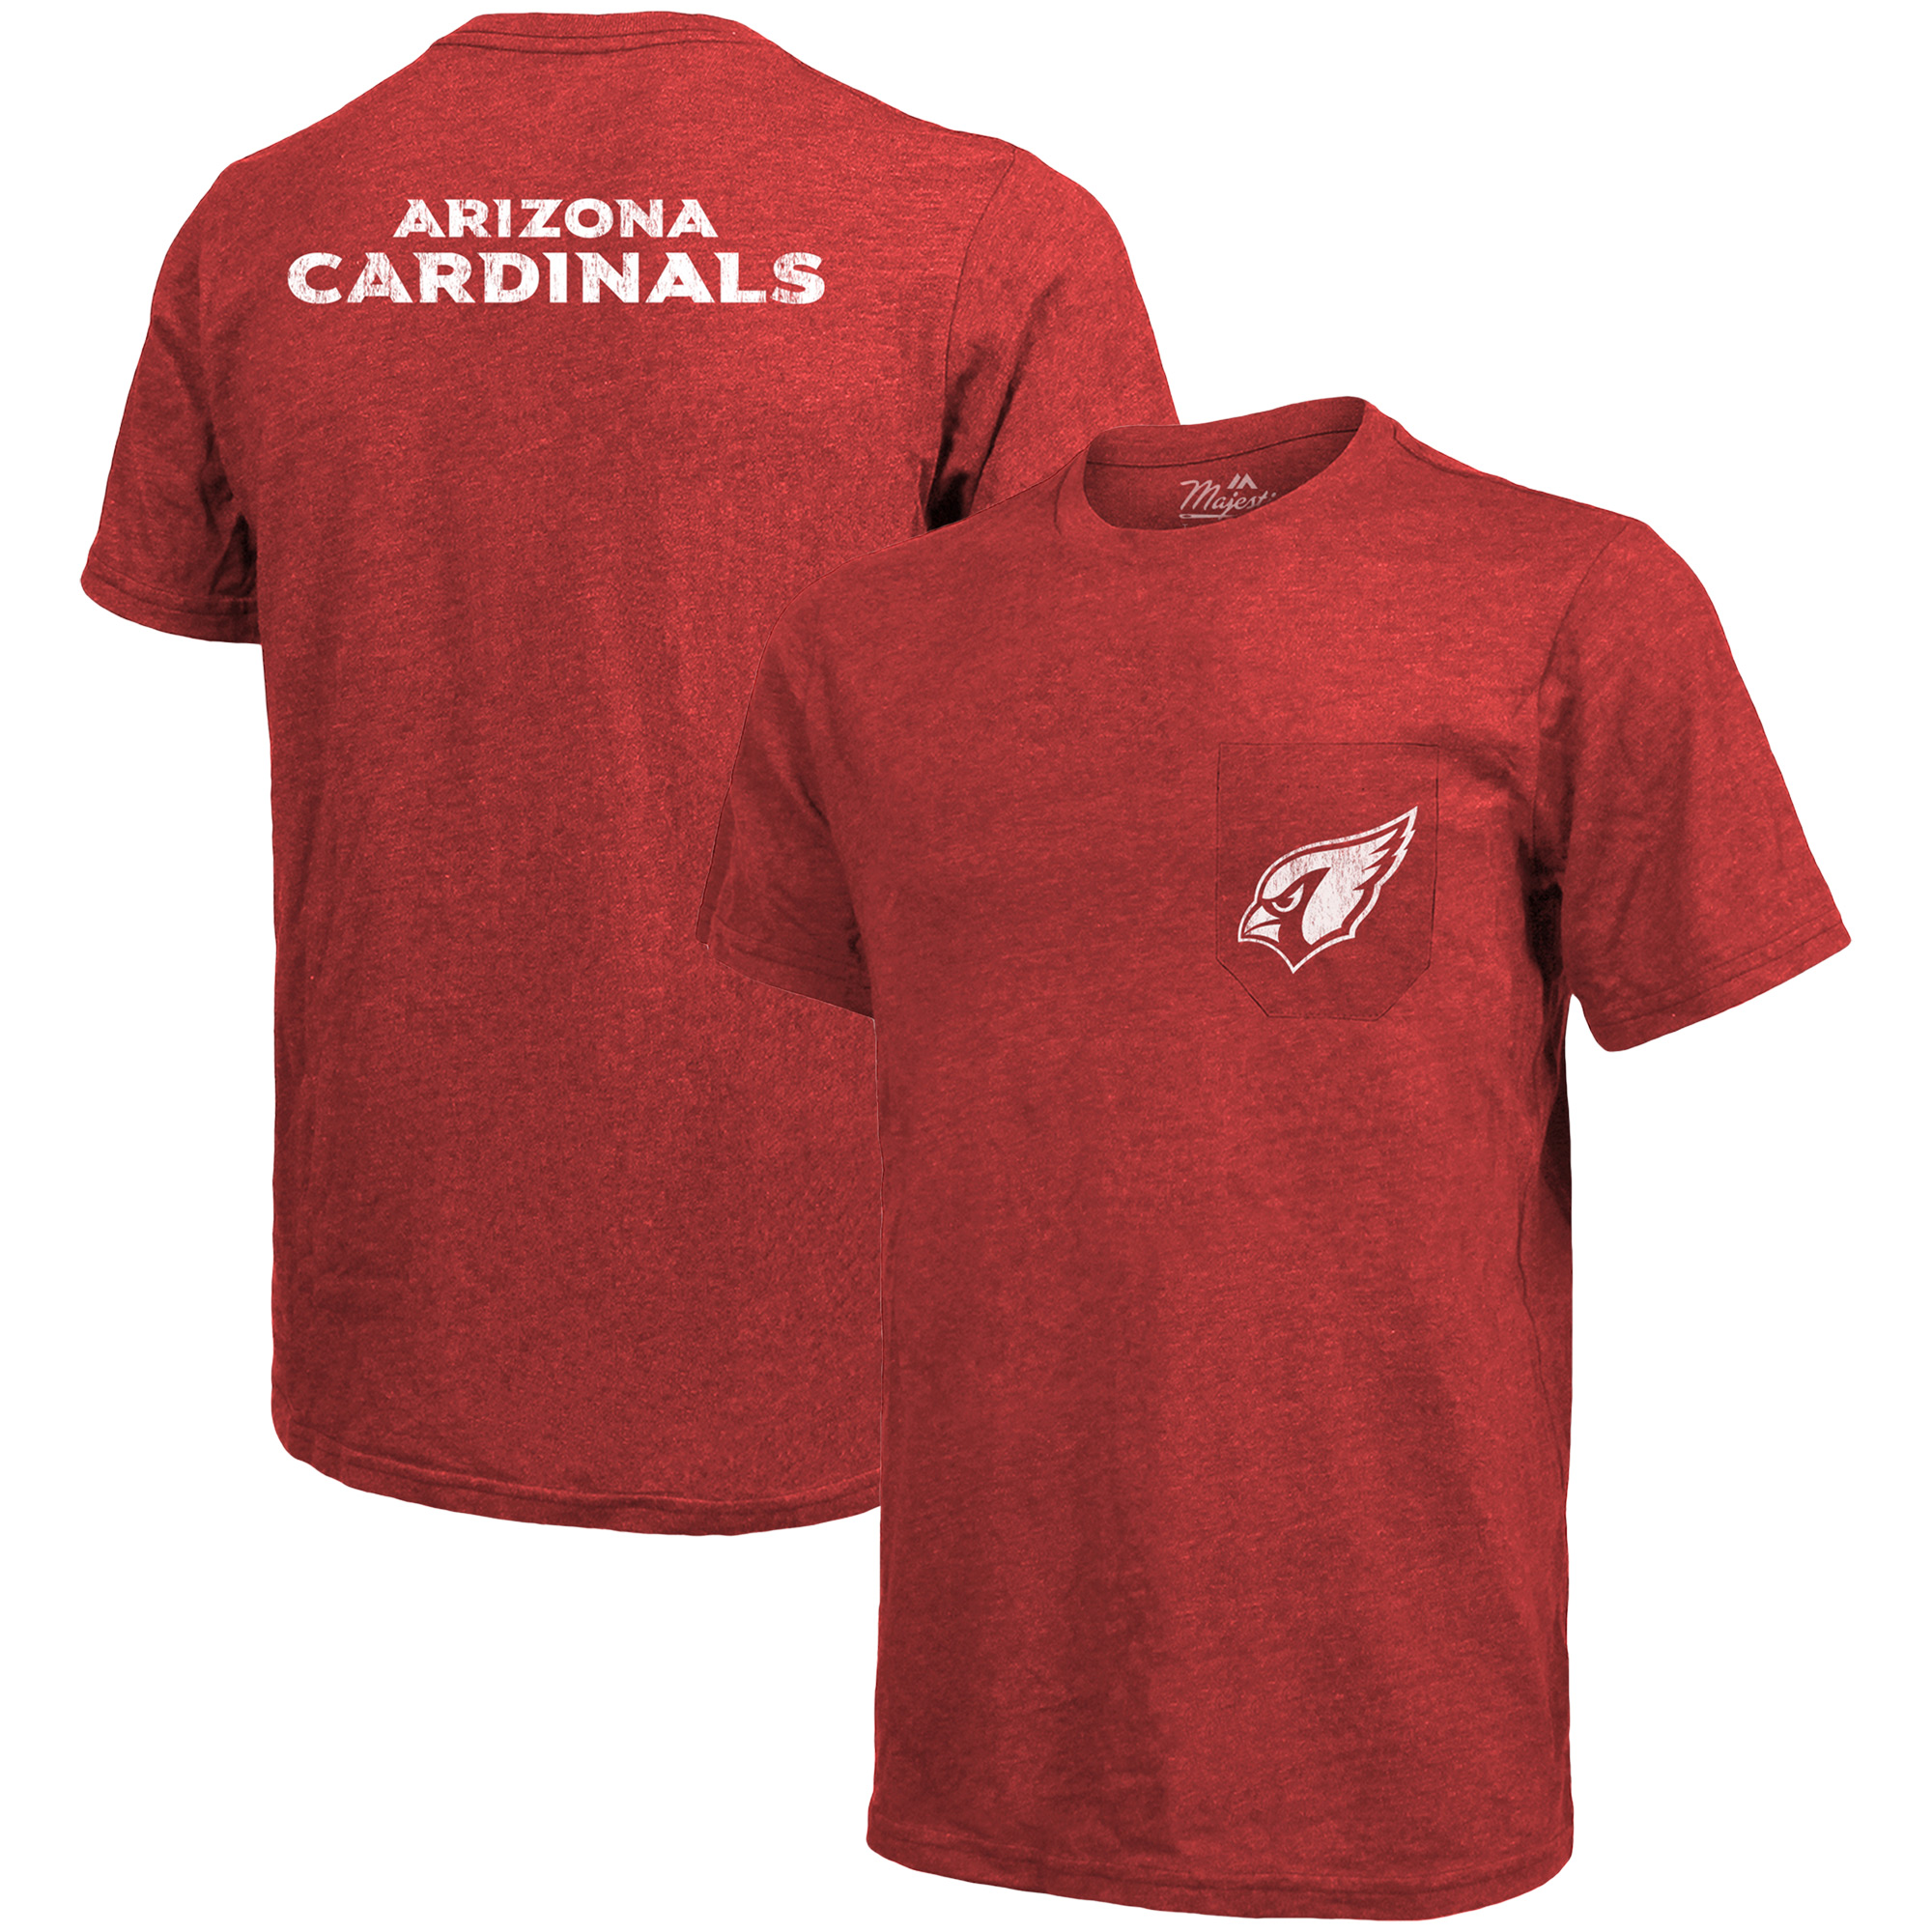 Arizona Cardinals - Tričko s kapsou - červené, tri-blend